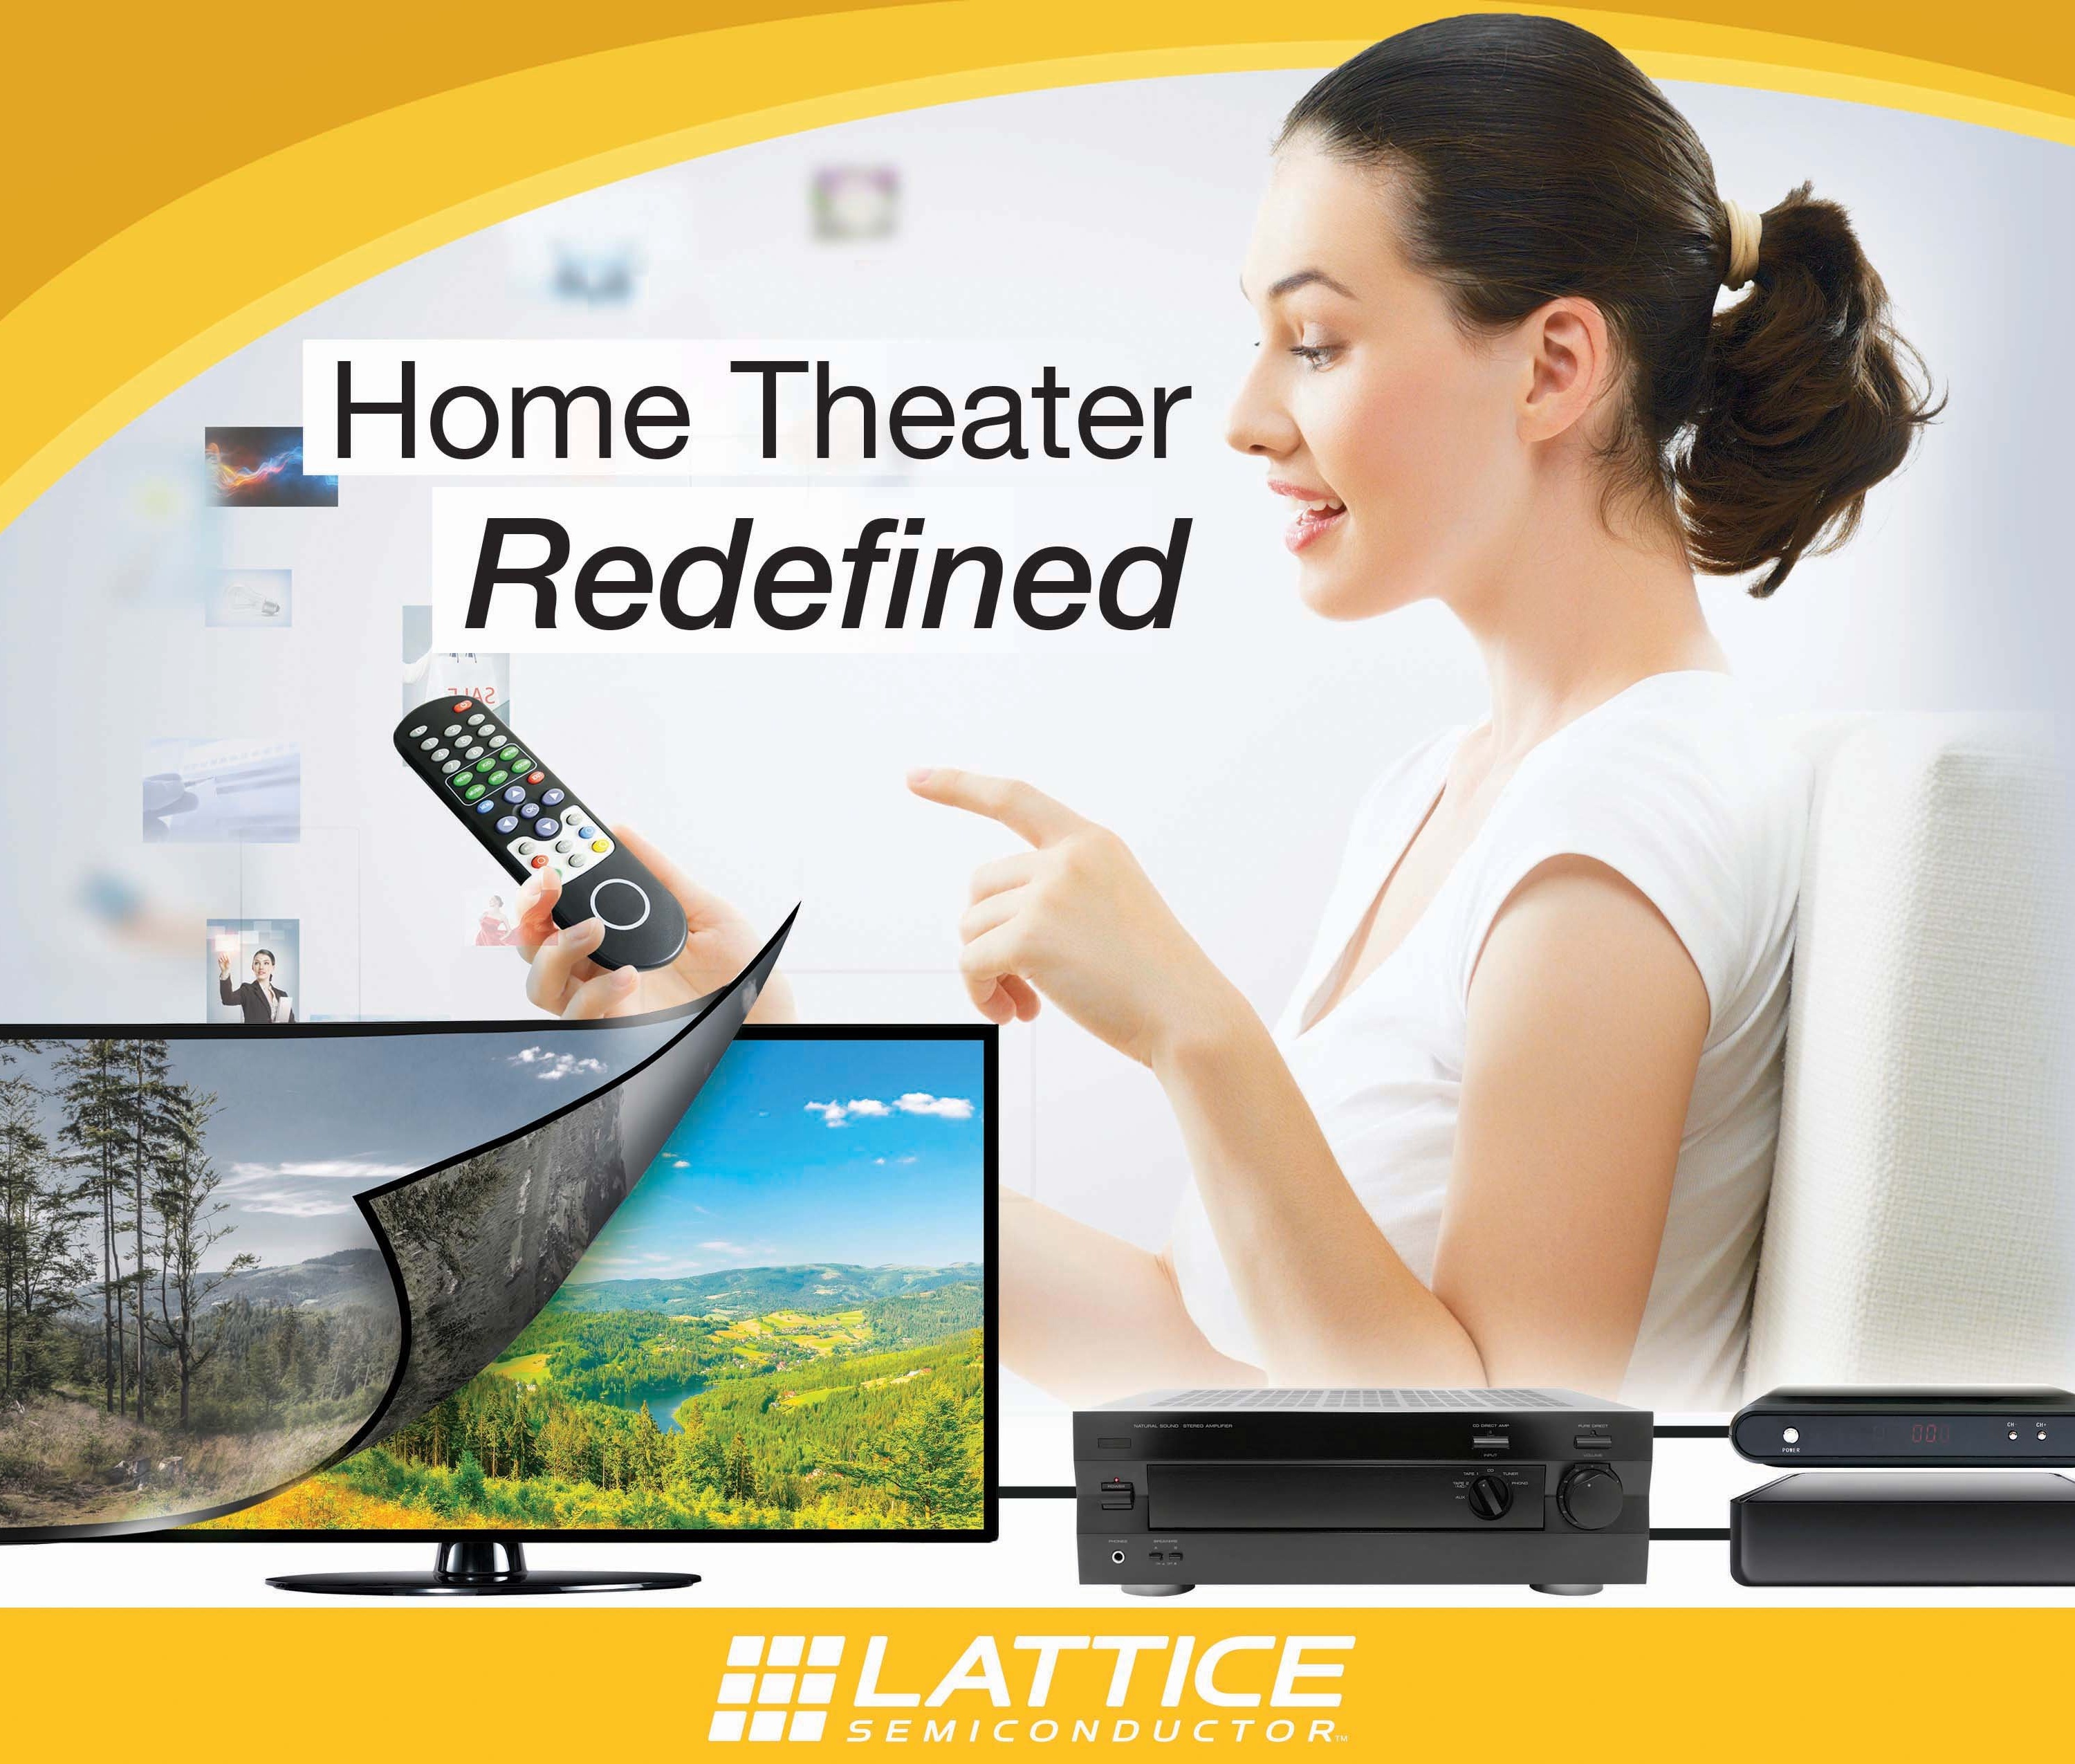 Lattice launches two new revolutionary superMHL/HDMI 2.0 solutions